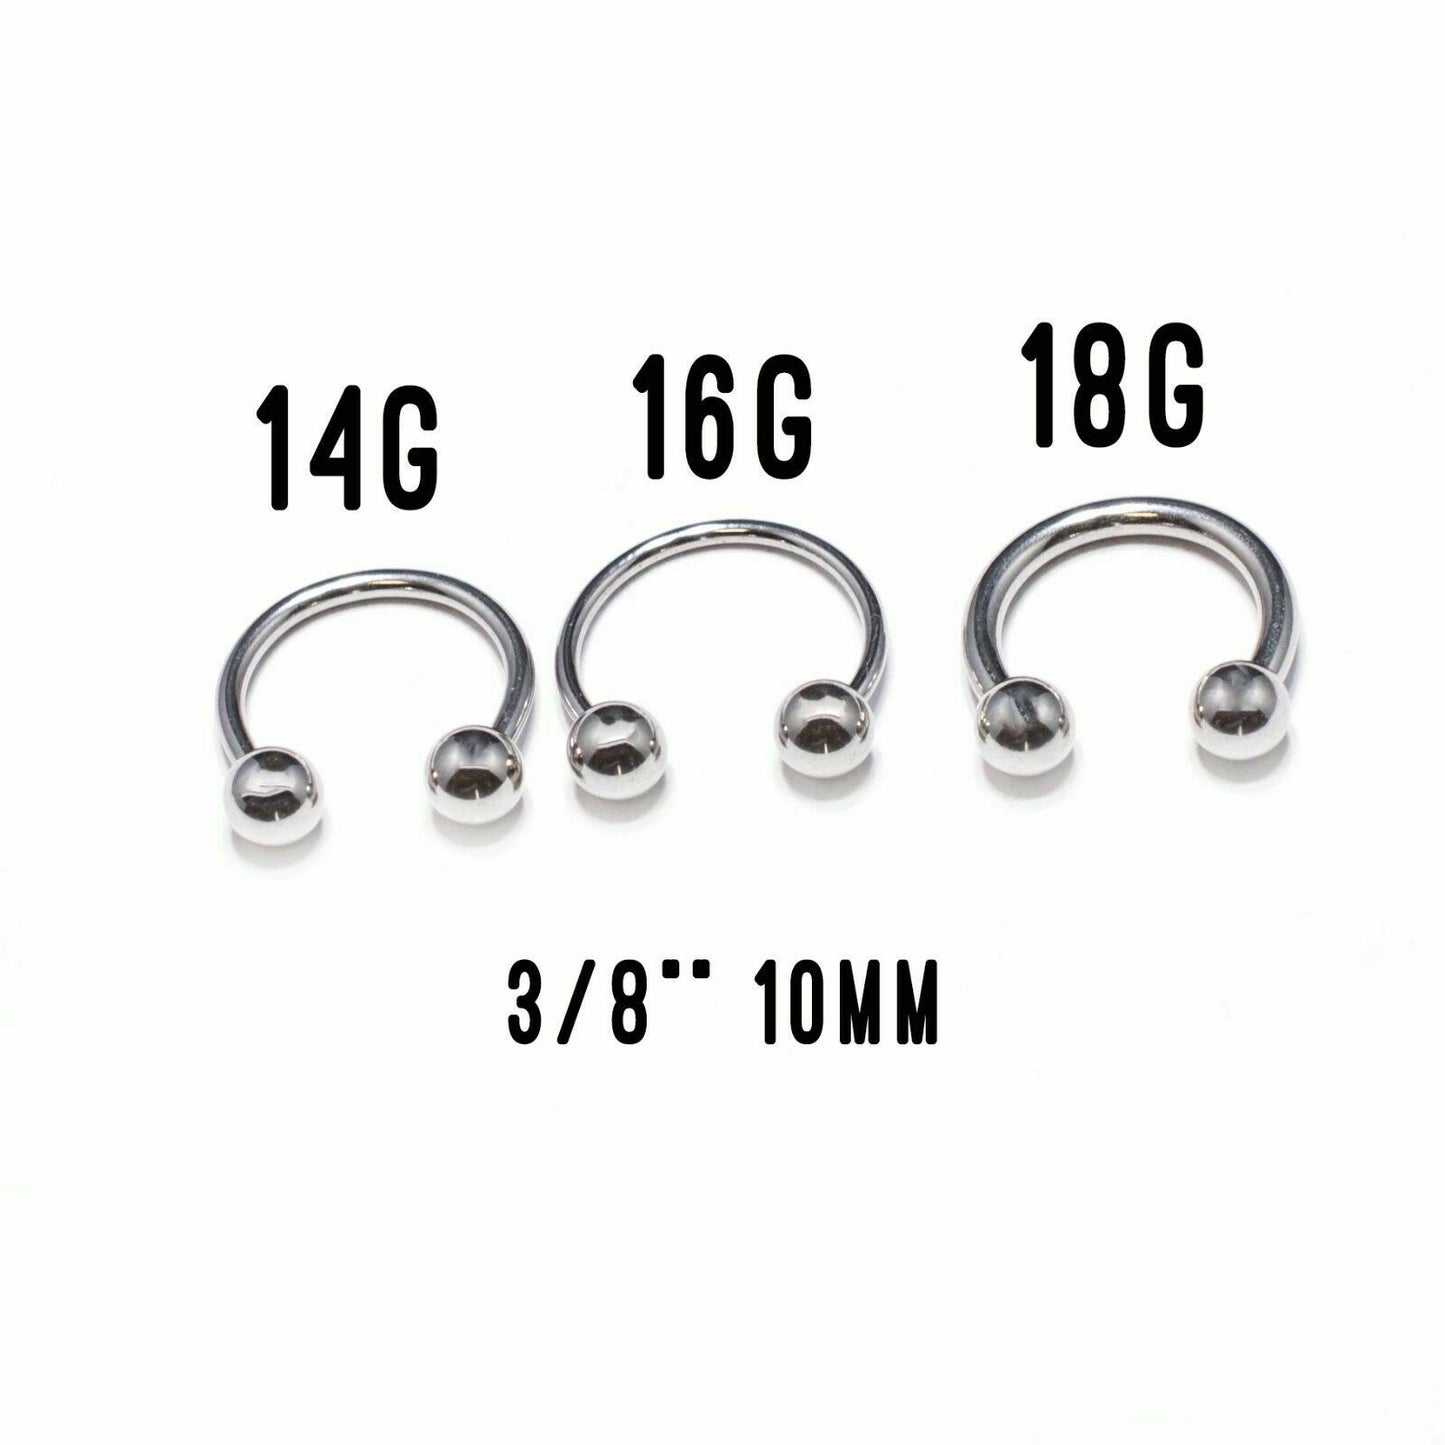 Septum Piercing Kit - 10-Piece Kit with 3 Horseshoe Ring, Needle, Forceps + More